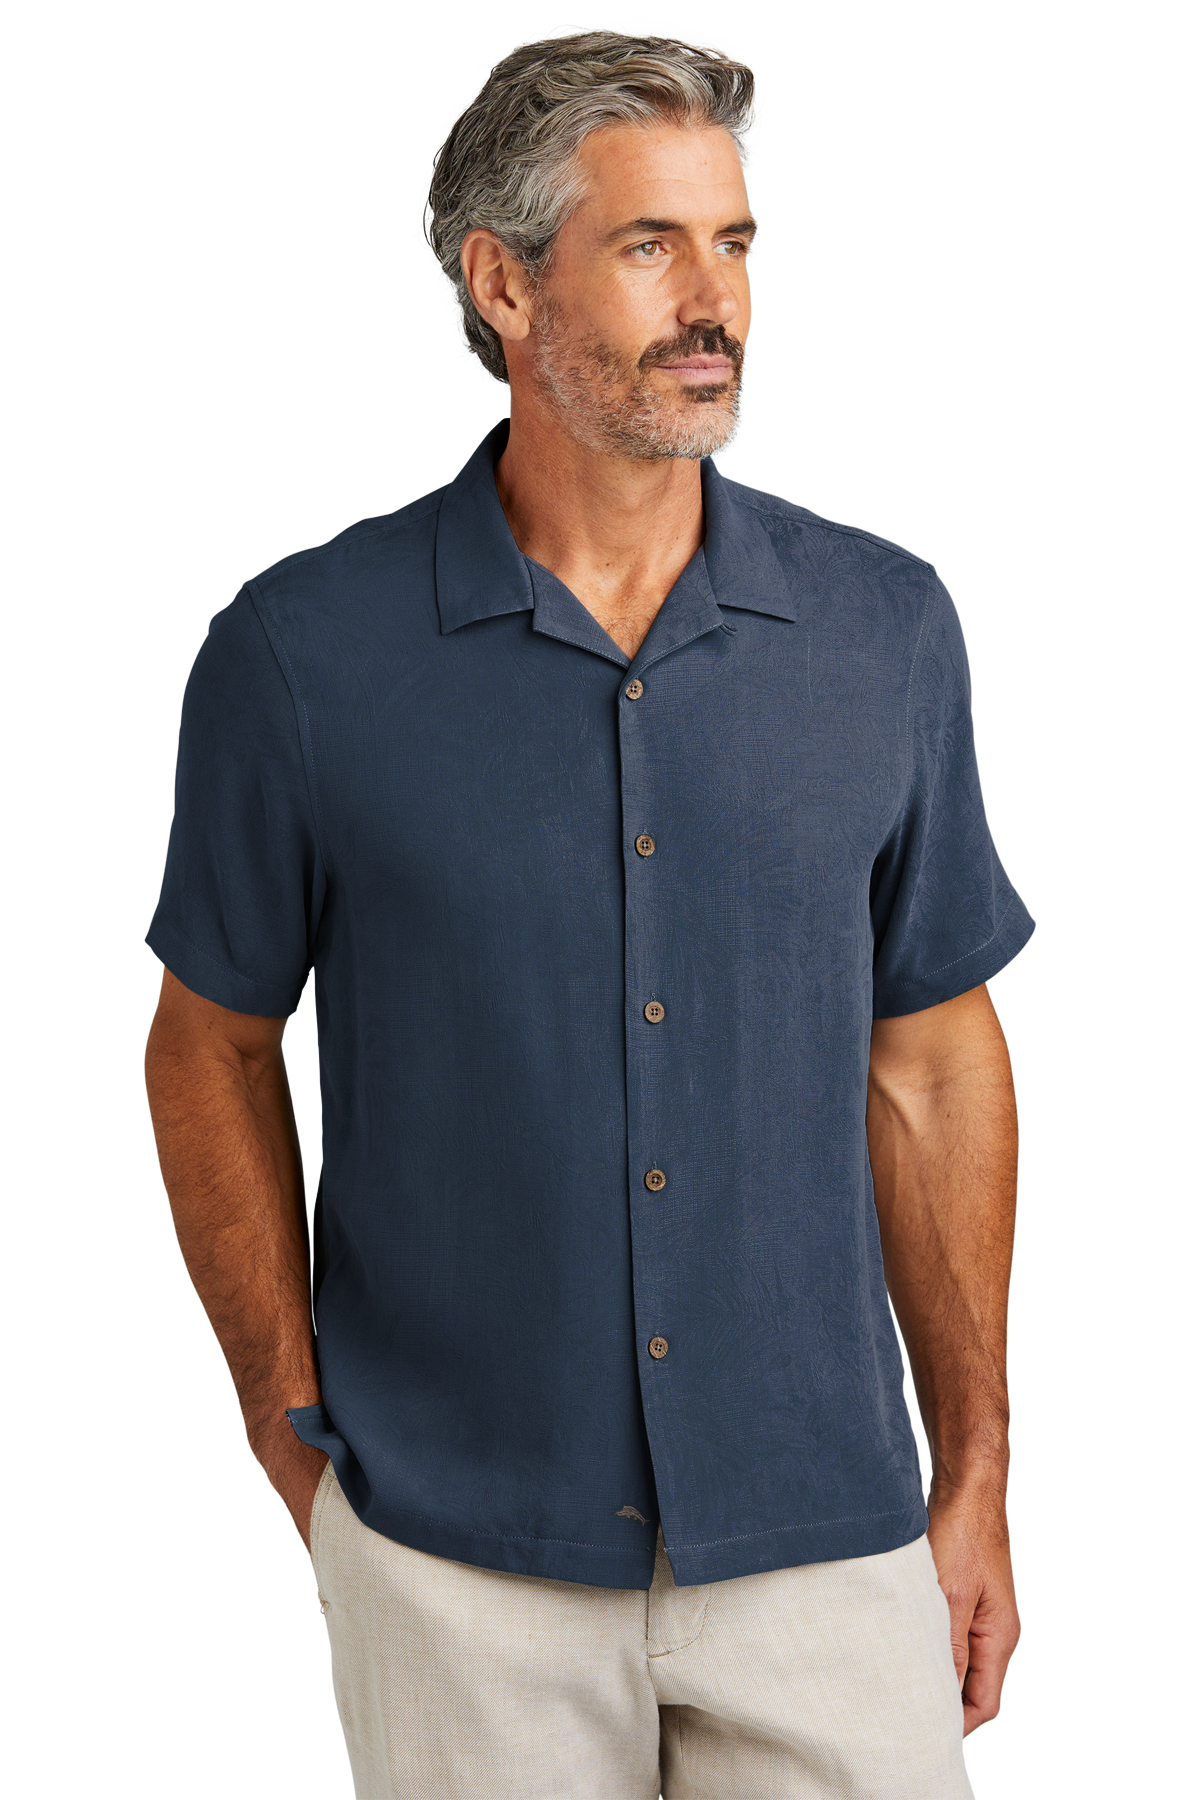 Tommy Bahama Tropic Isles Short Sleeve Shirt, Product